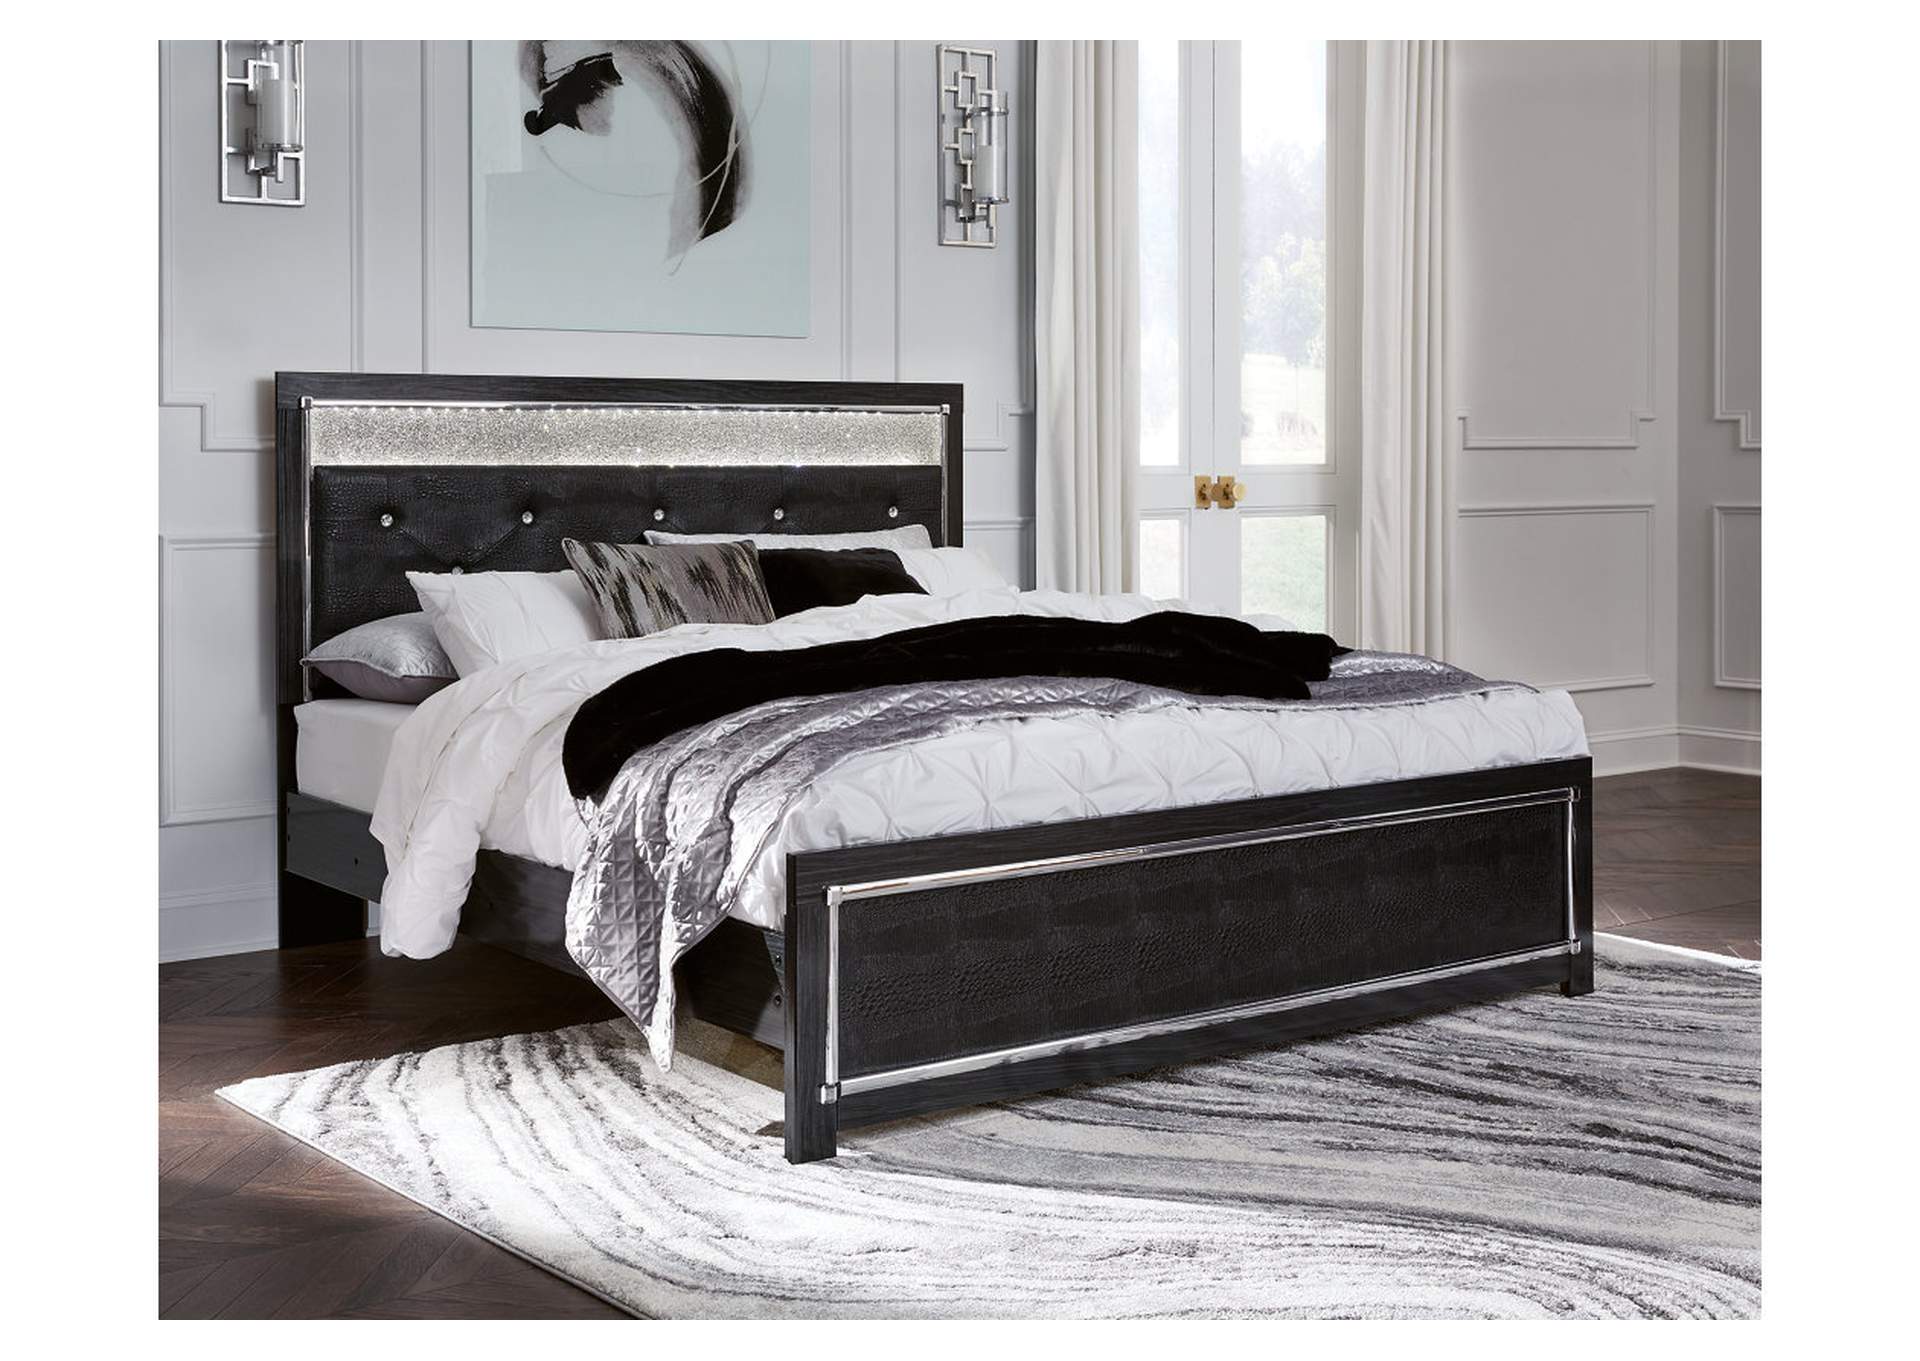 Kaydell King Upholstered Panel Platform Bed, Dresser and Mirror,Signature Design By Ashley